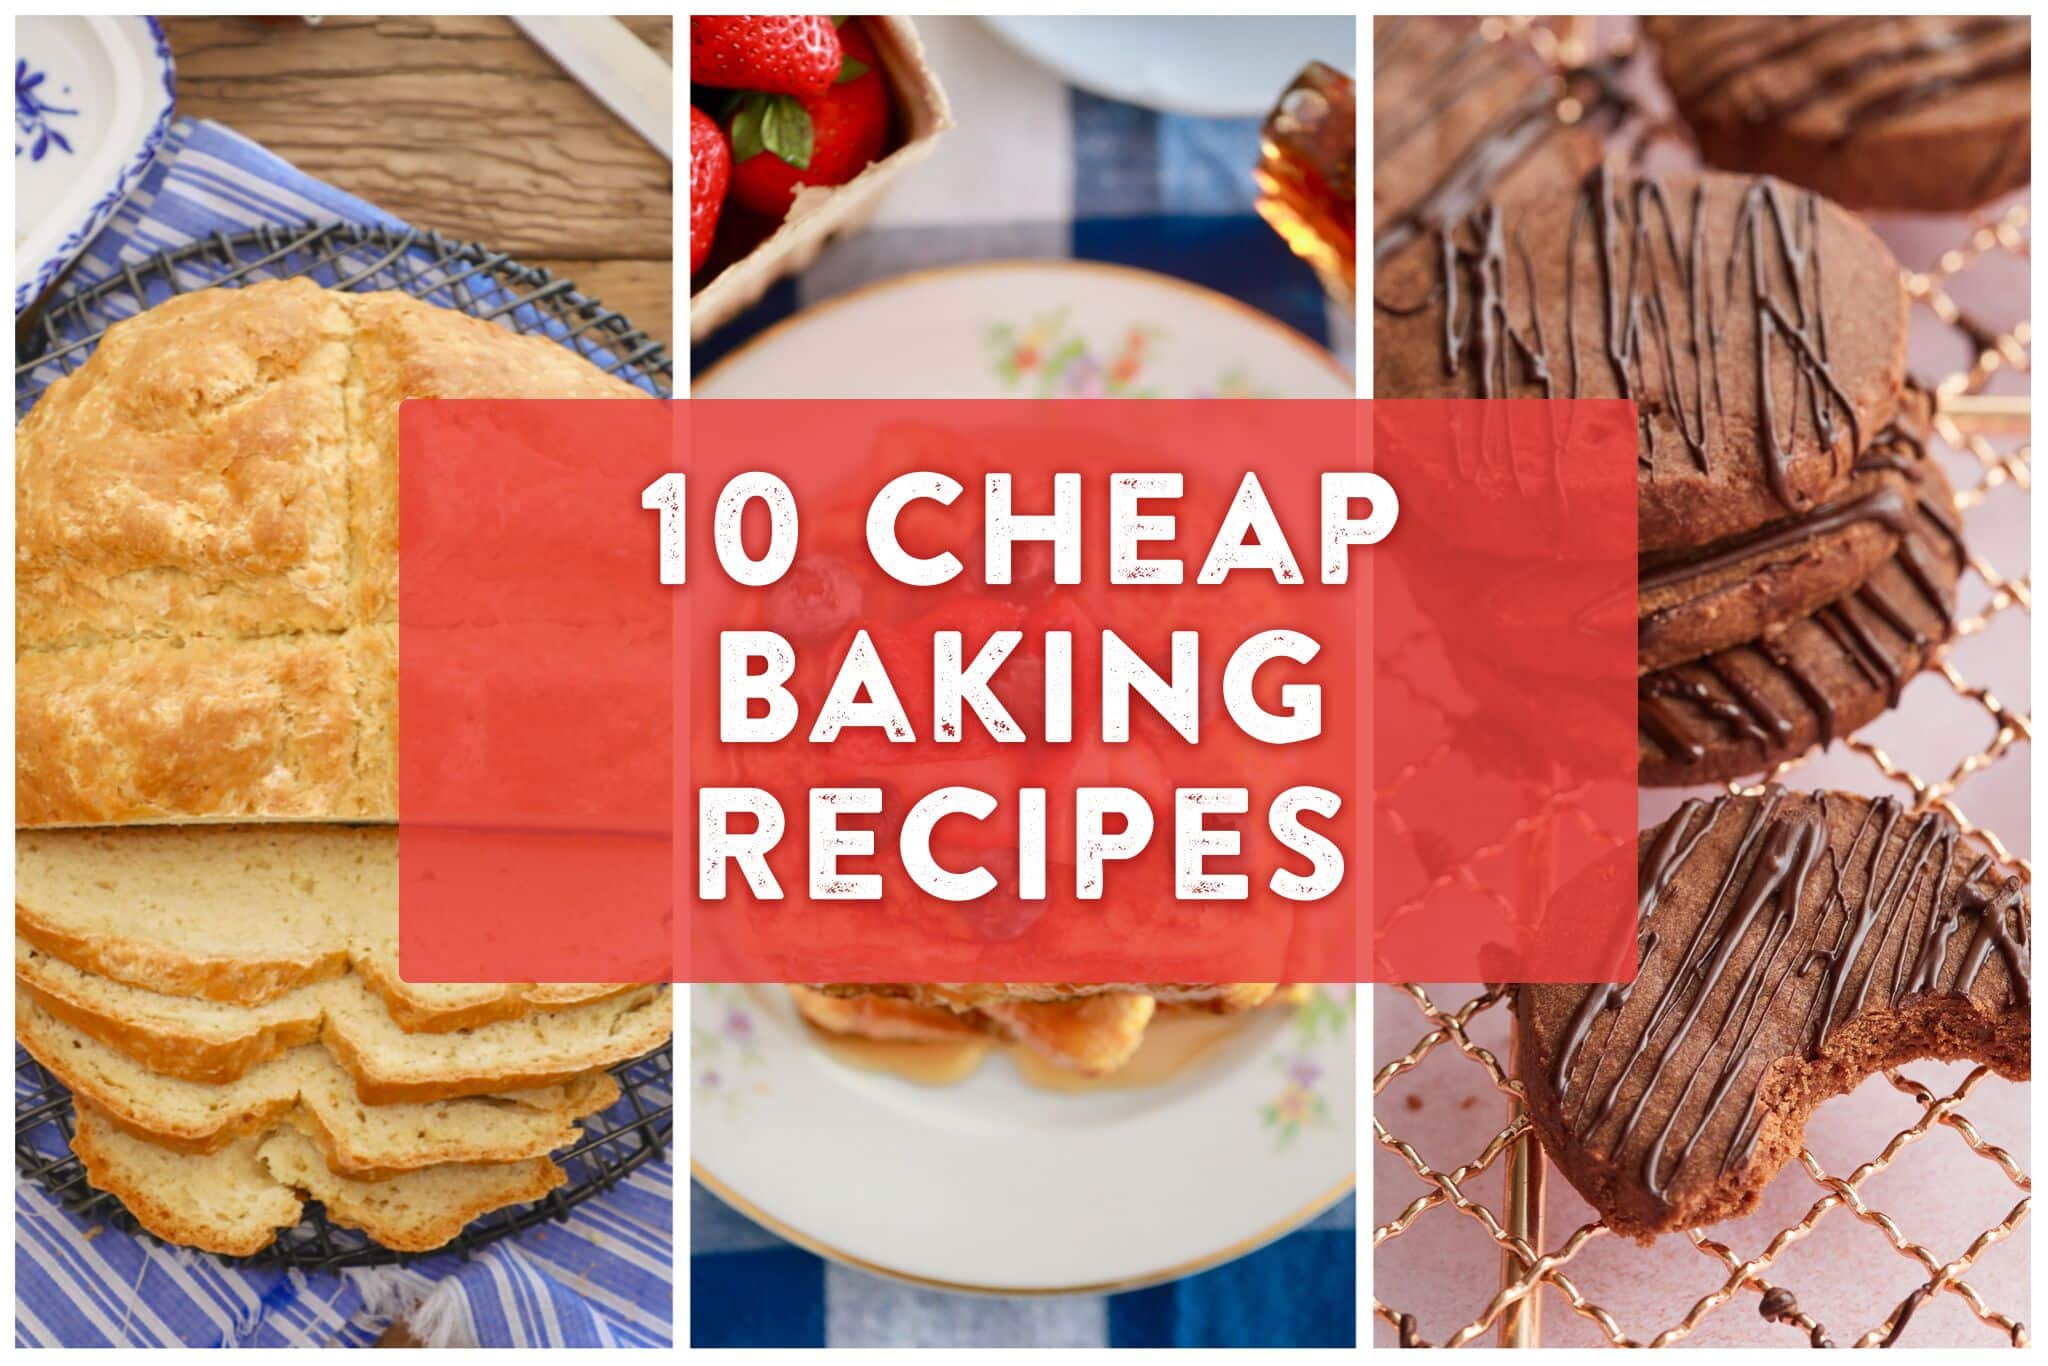 Budget-friendly baking recipes